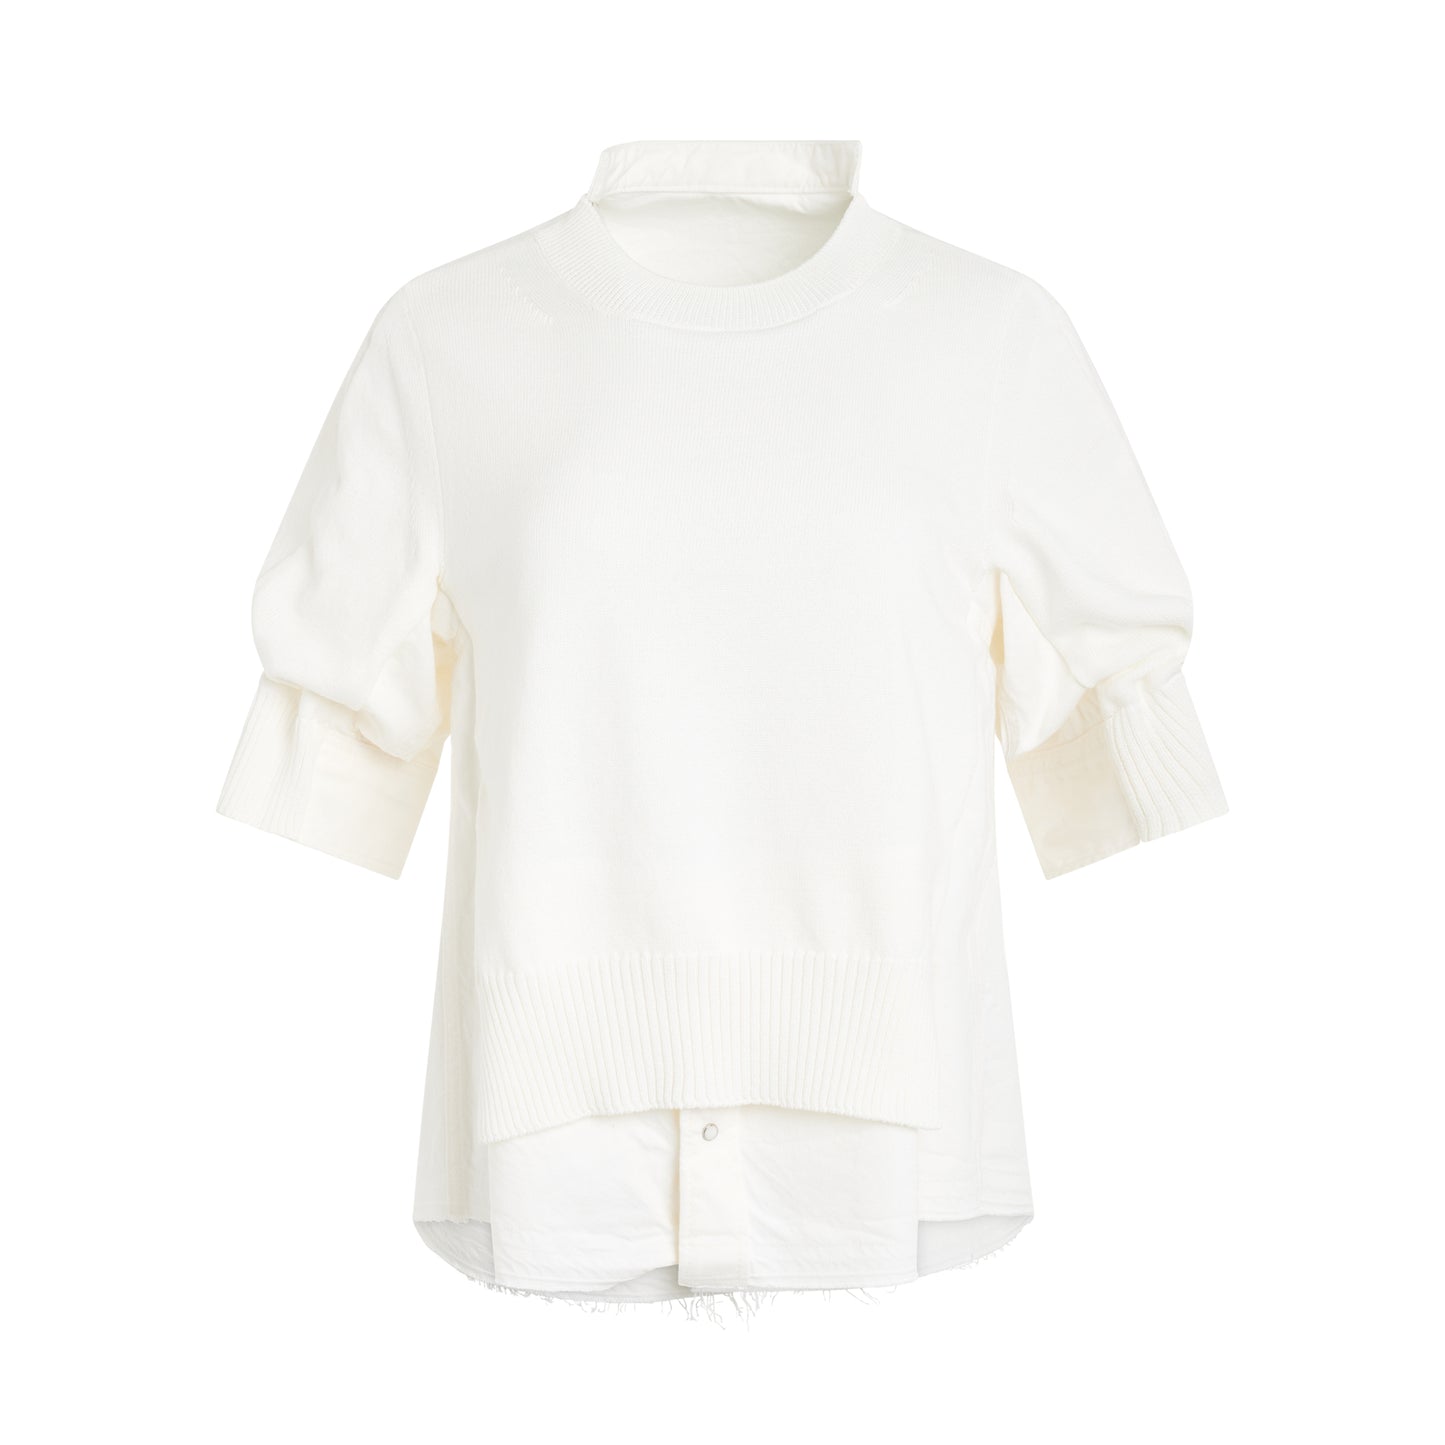 Denim x Knit Sweater in Off White